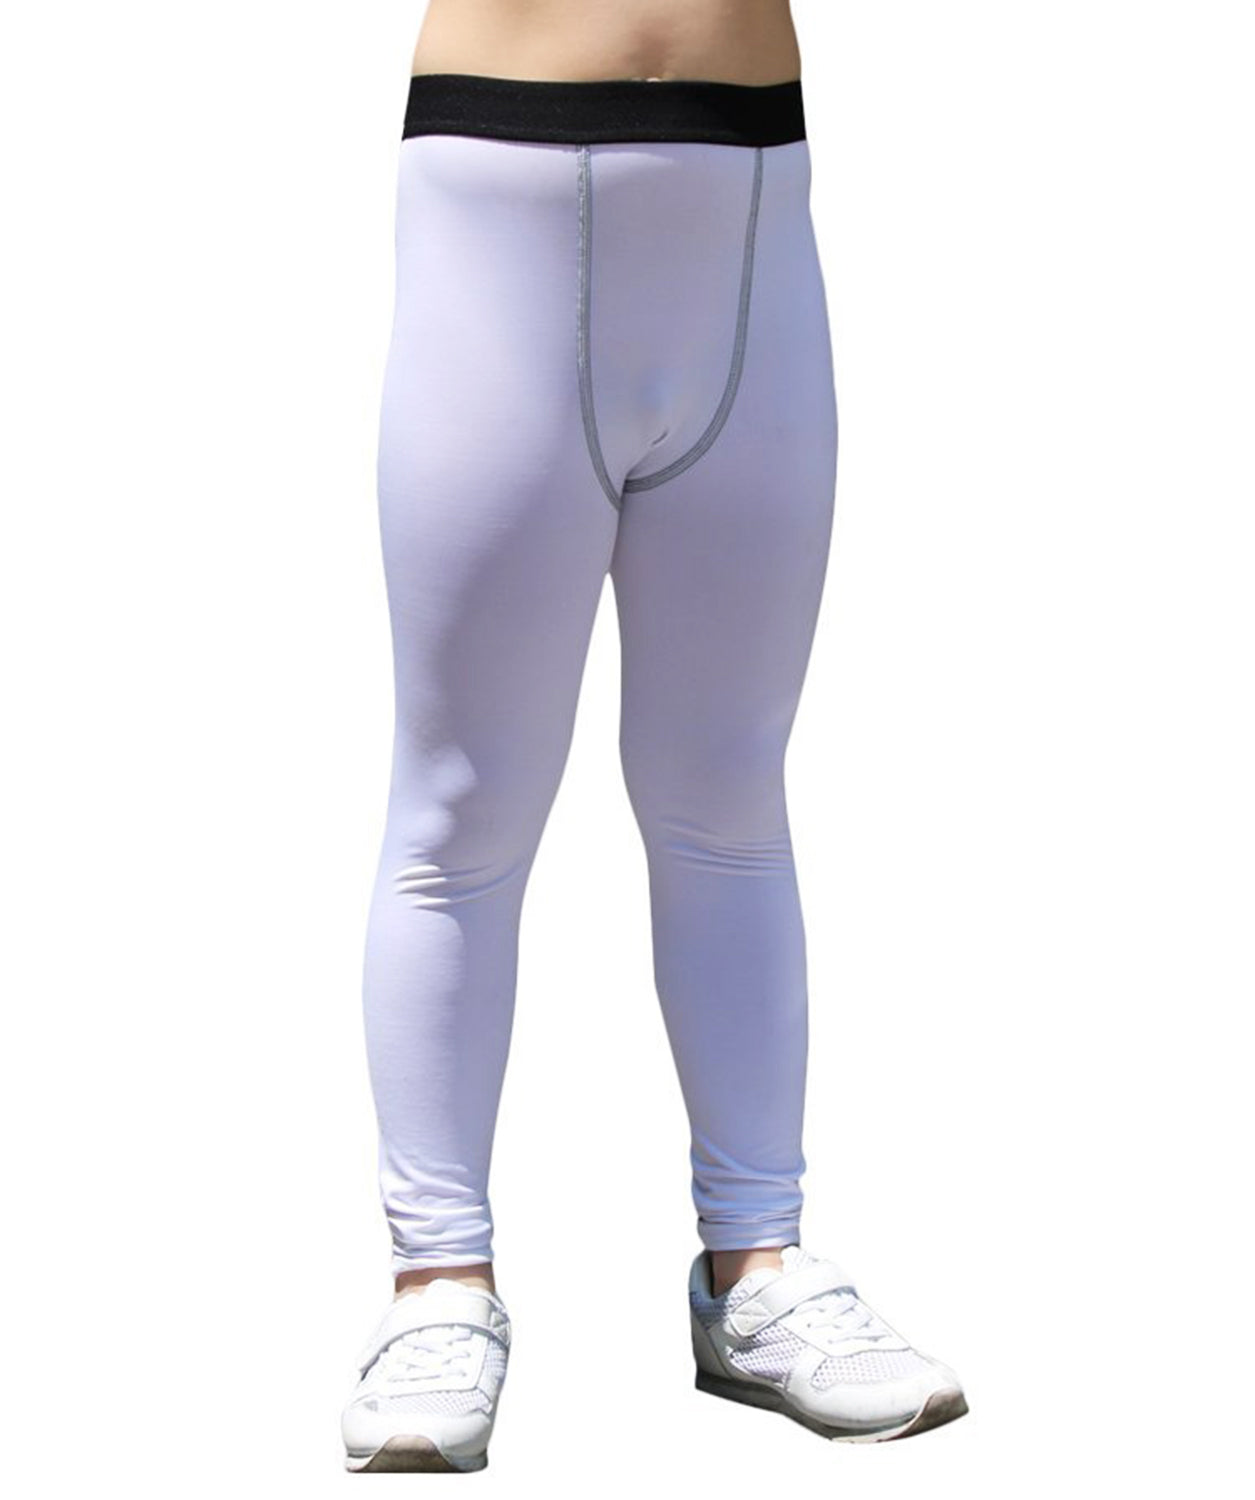 Youth Boys Compression Leggings Girls Athletic Sport Base Layer Pants Workout Running LANBAOSI